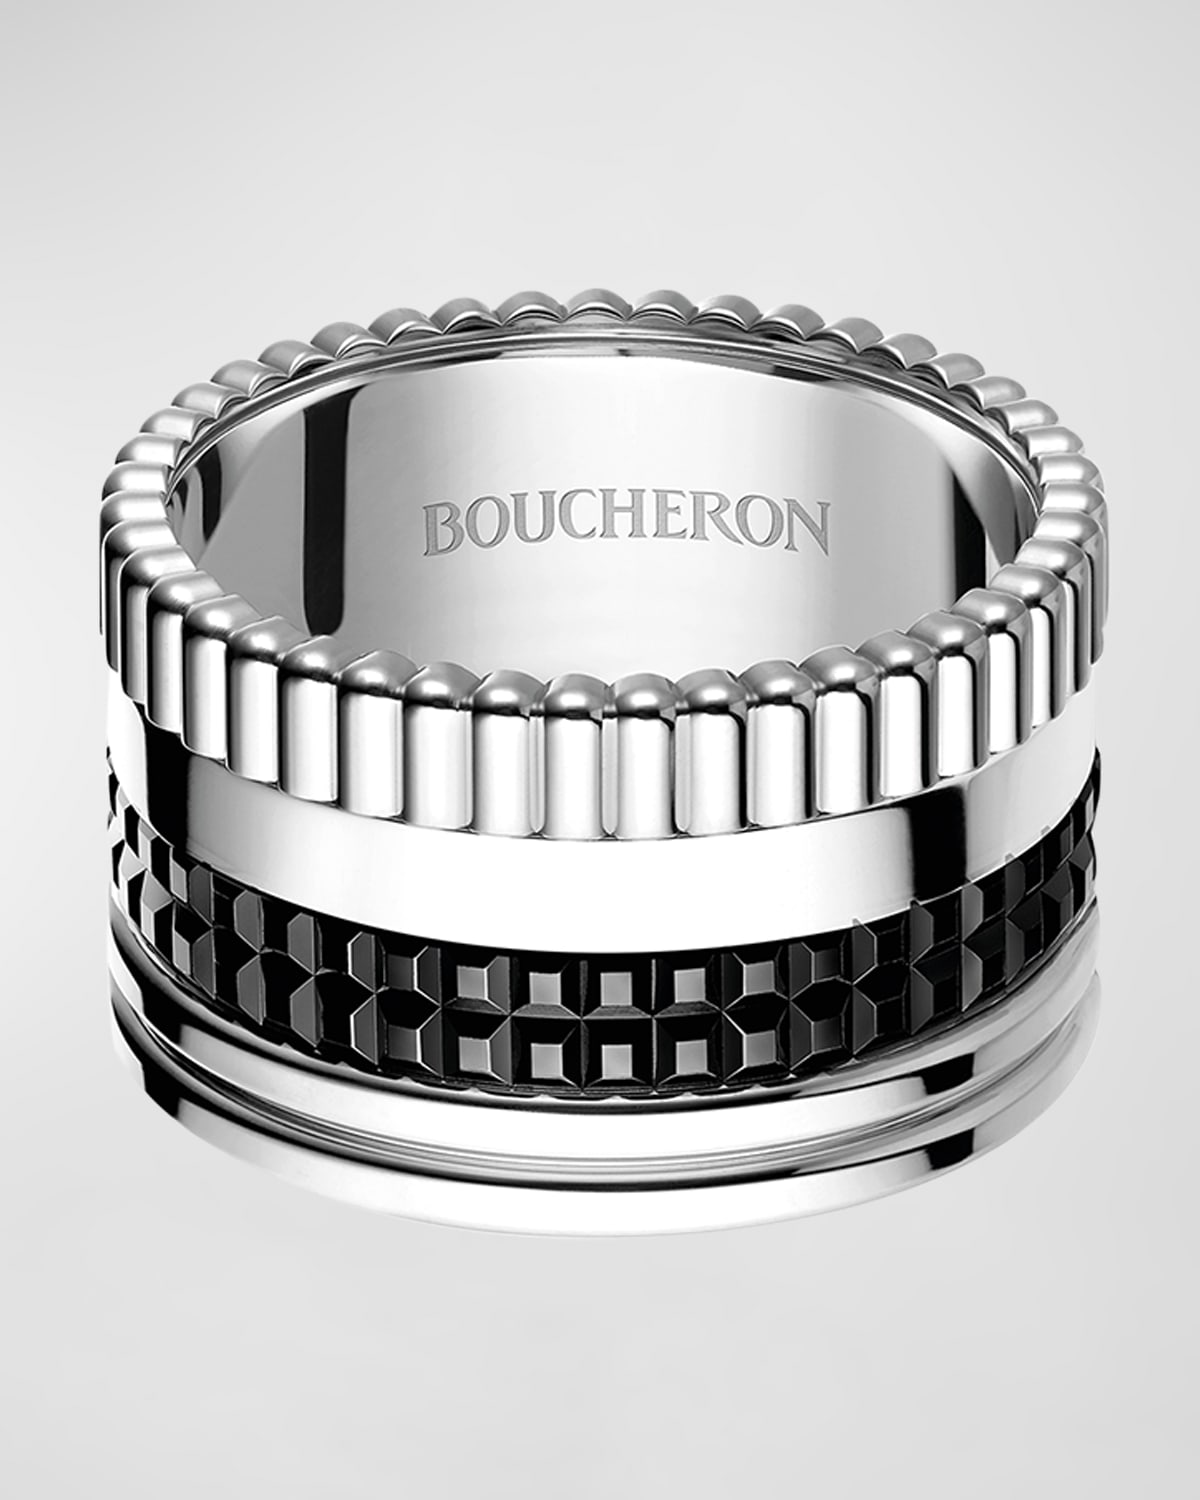 BOUCHERON QUATRE BLACK EDITION LARGE BAND RING, EU 58 / US 8.25